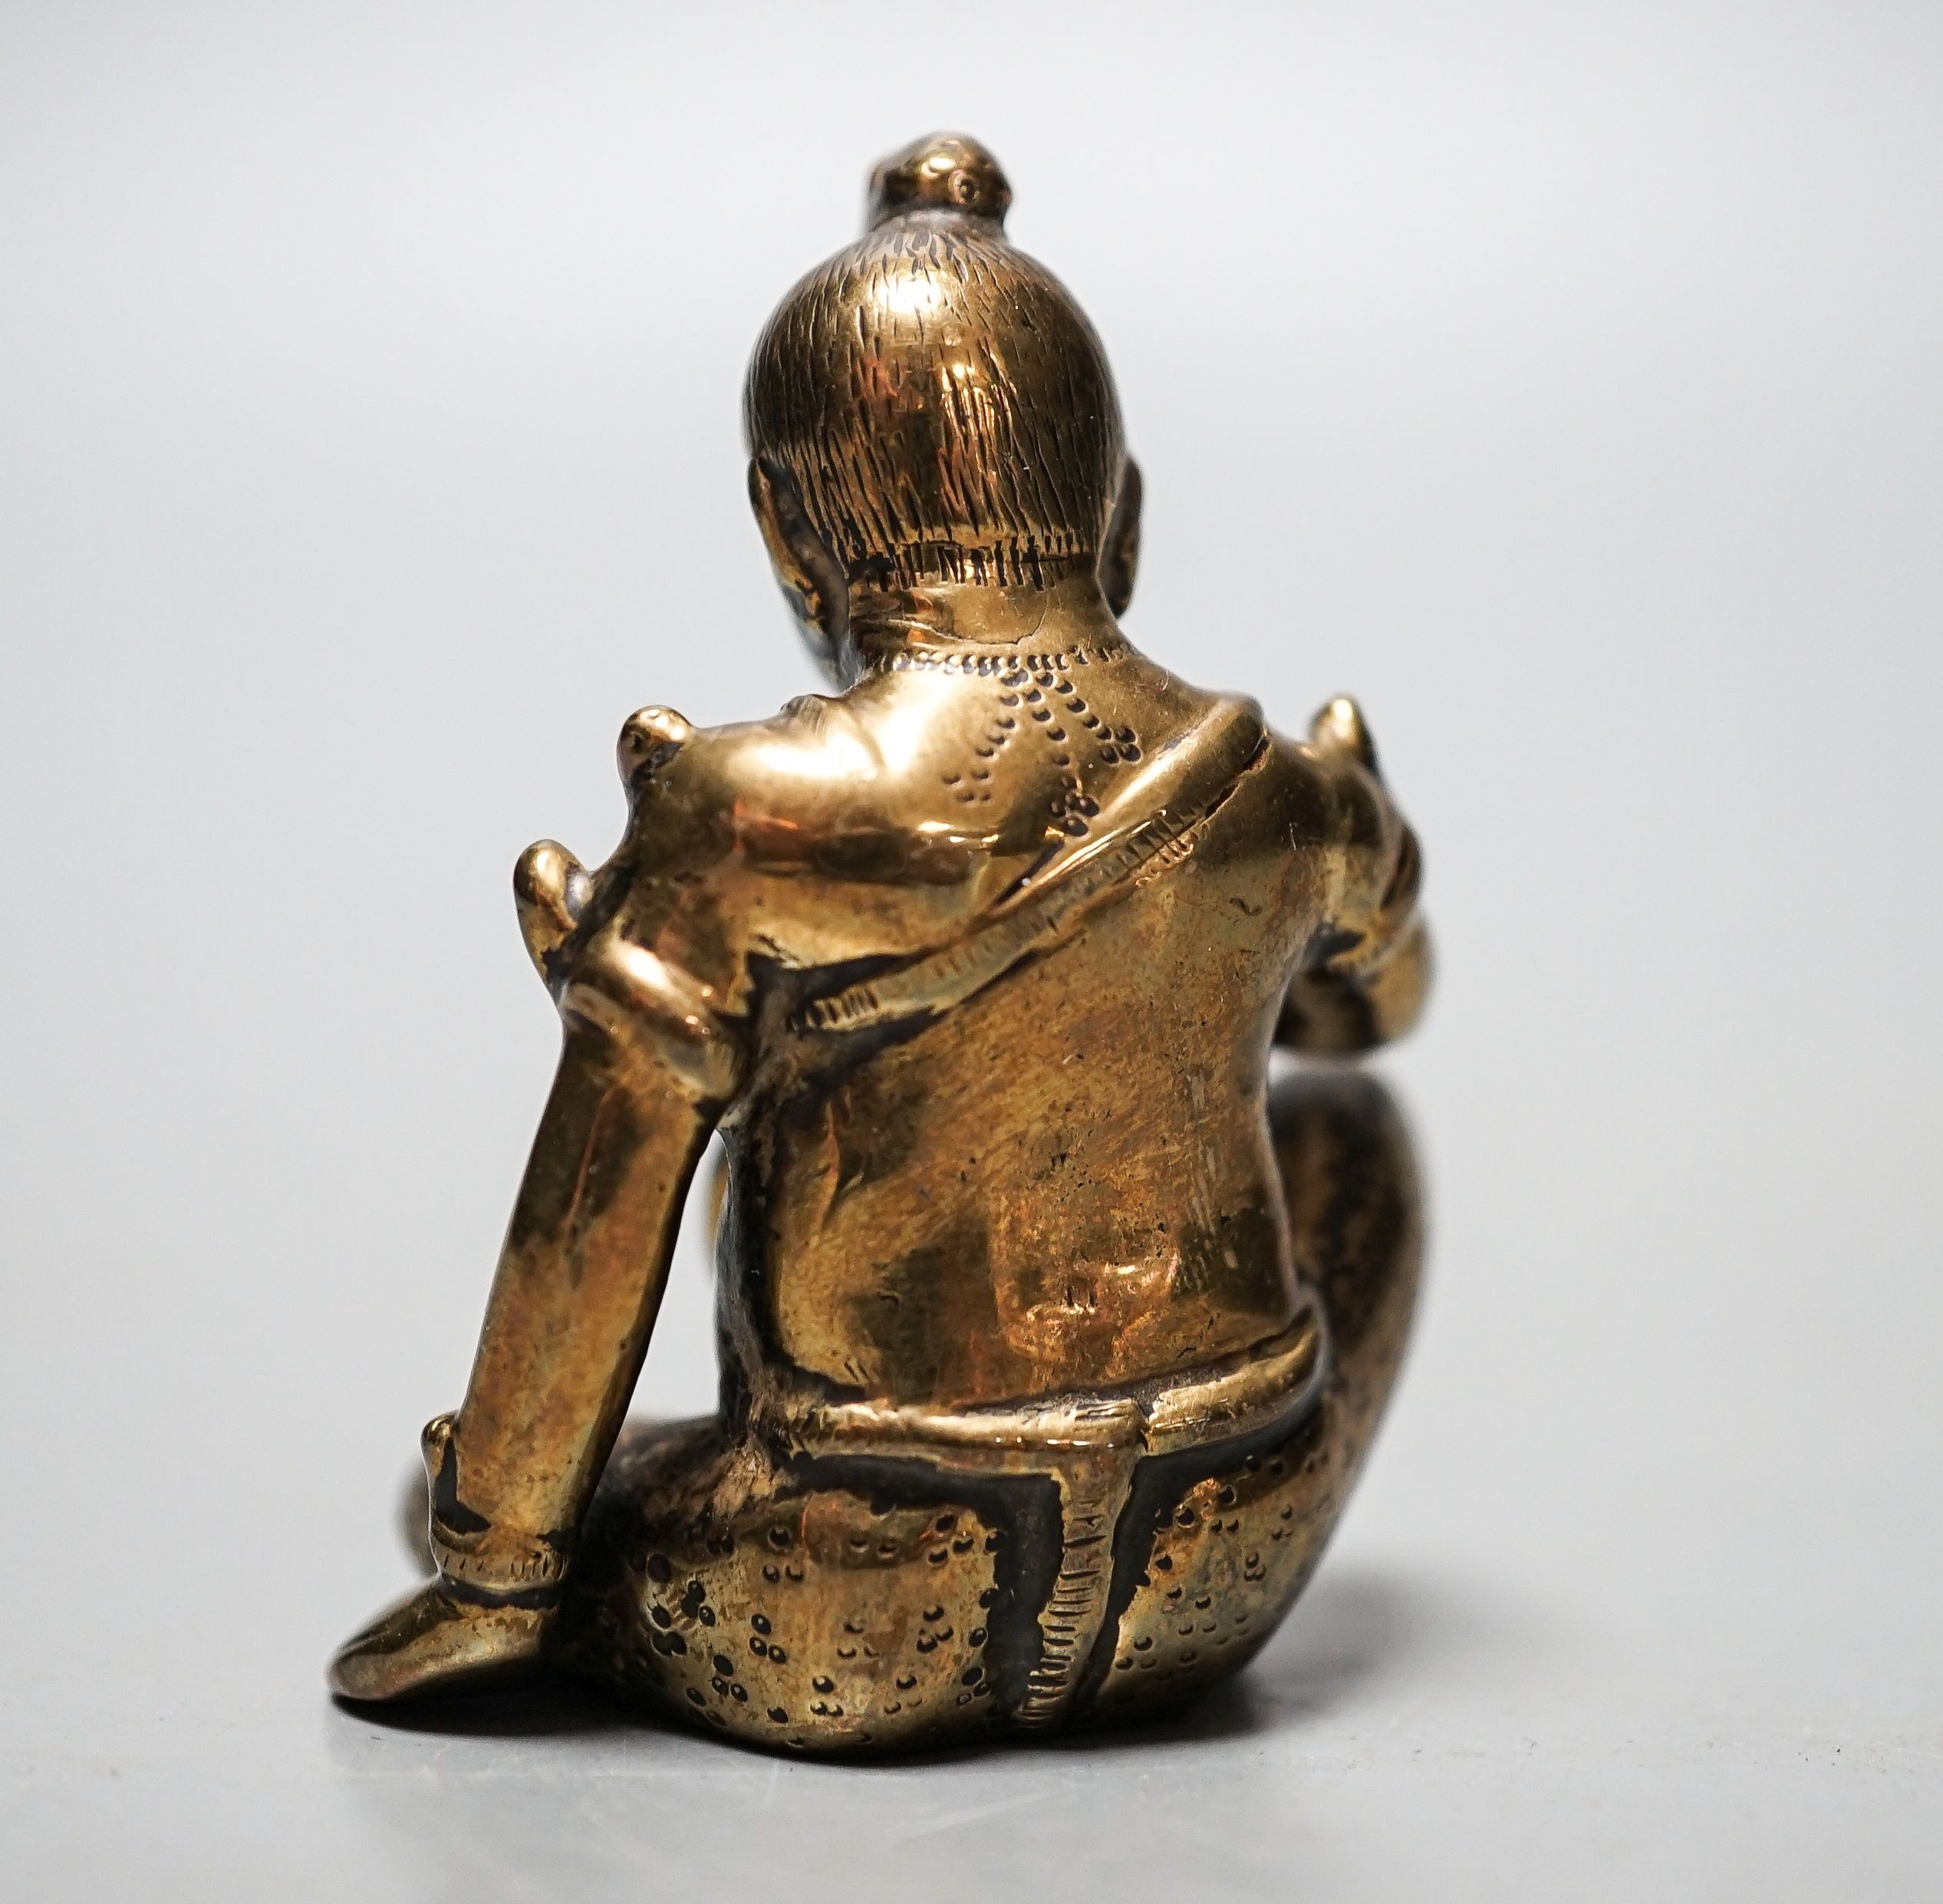 A 19th century bronze Buddhist seated figure 5.5cm